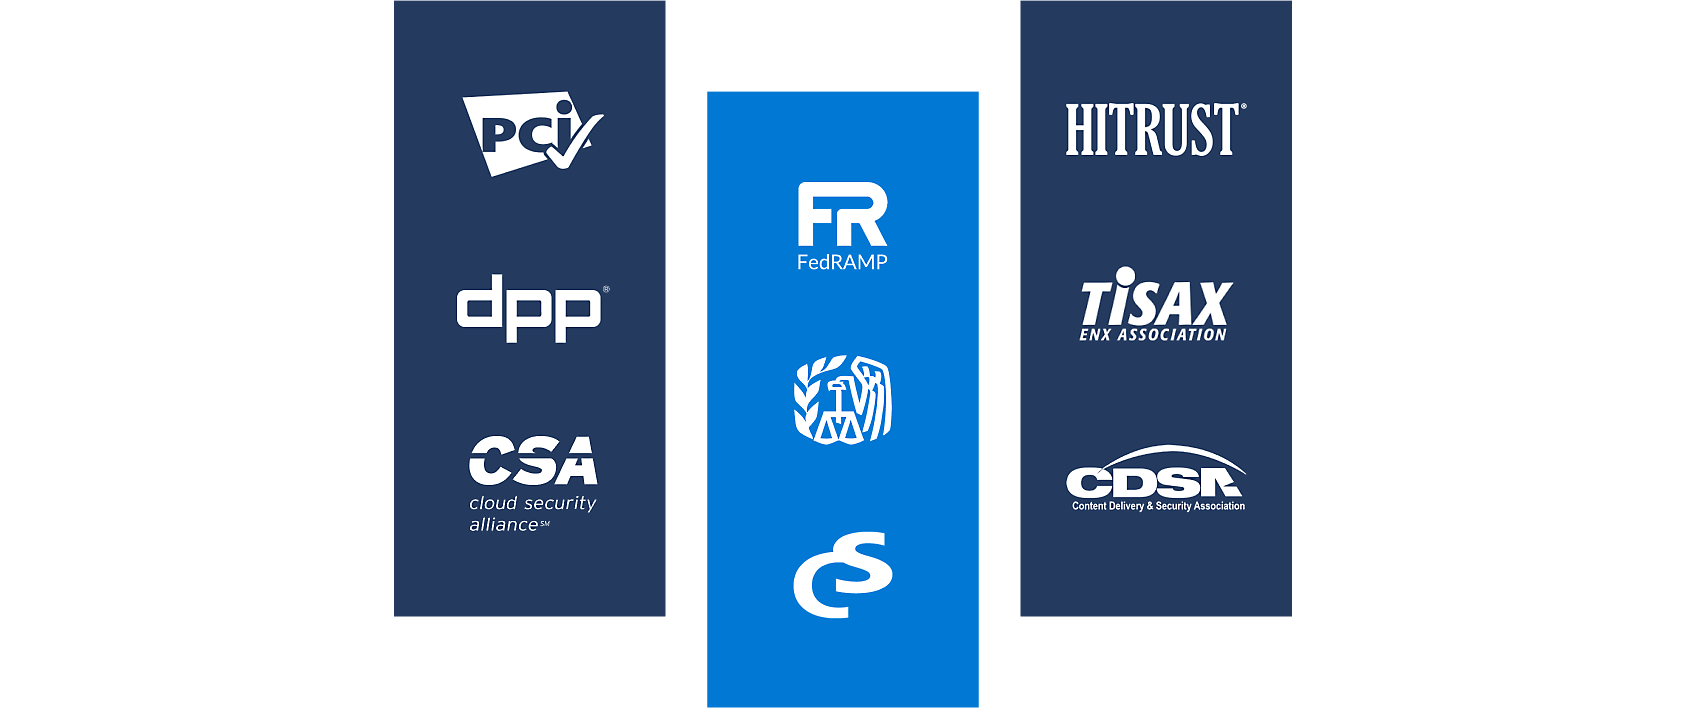 PCI、Cloud Security Alliance、FedRAMP、HITRUST などのロゴ